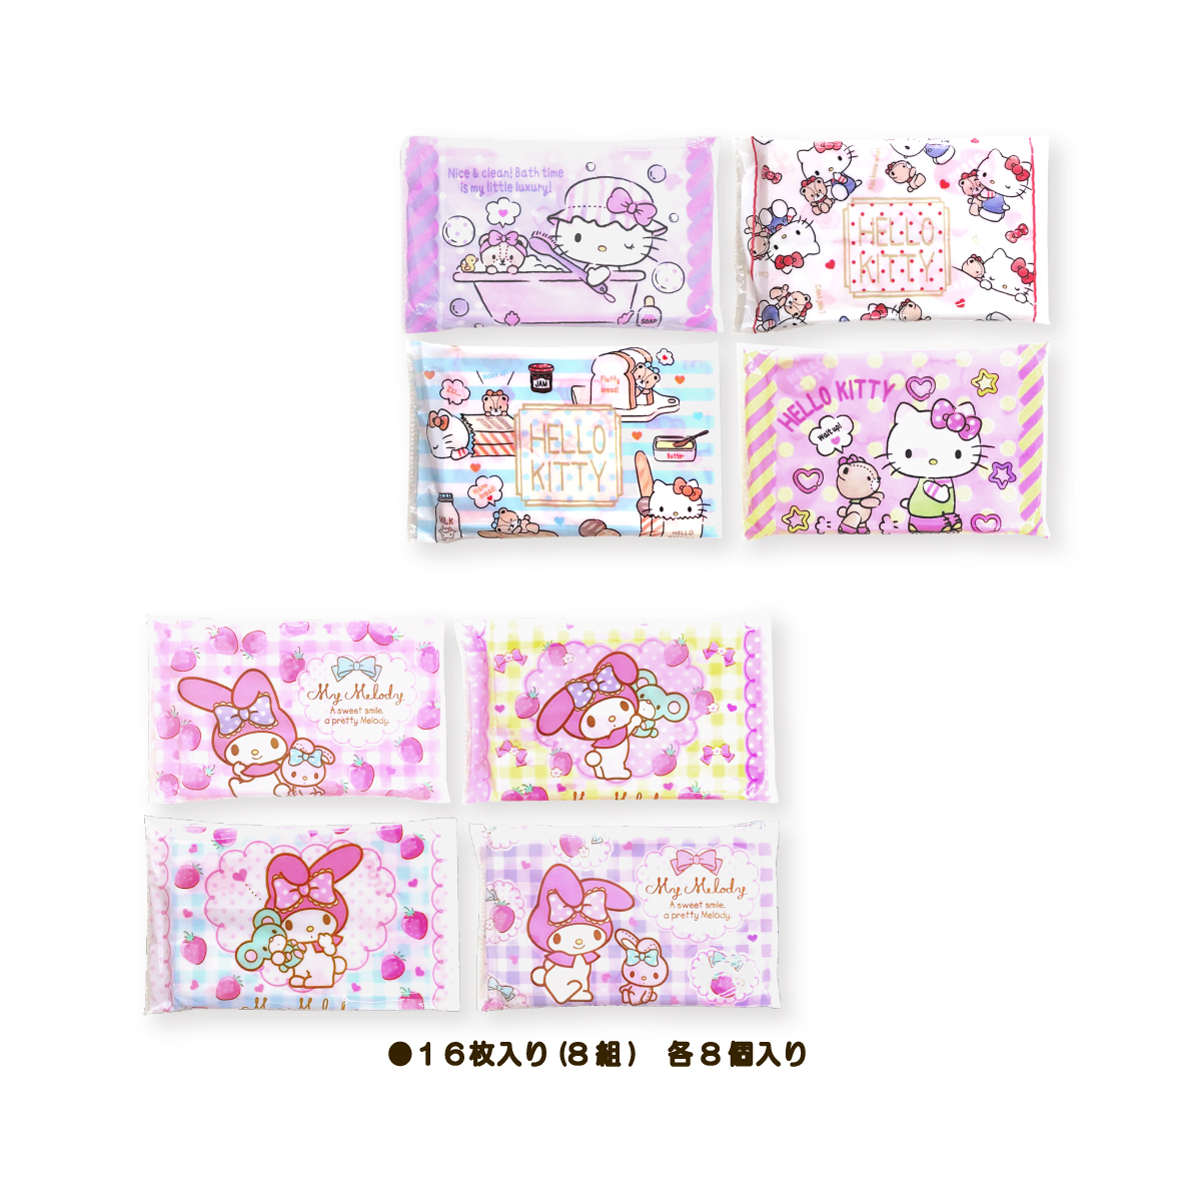  pocket tishu Mini tishu Hello Kitty My Melody Sanrio 8 piece pack lovely made in Japan 